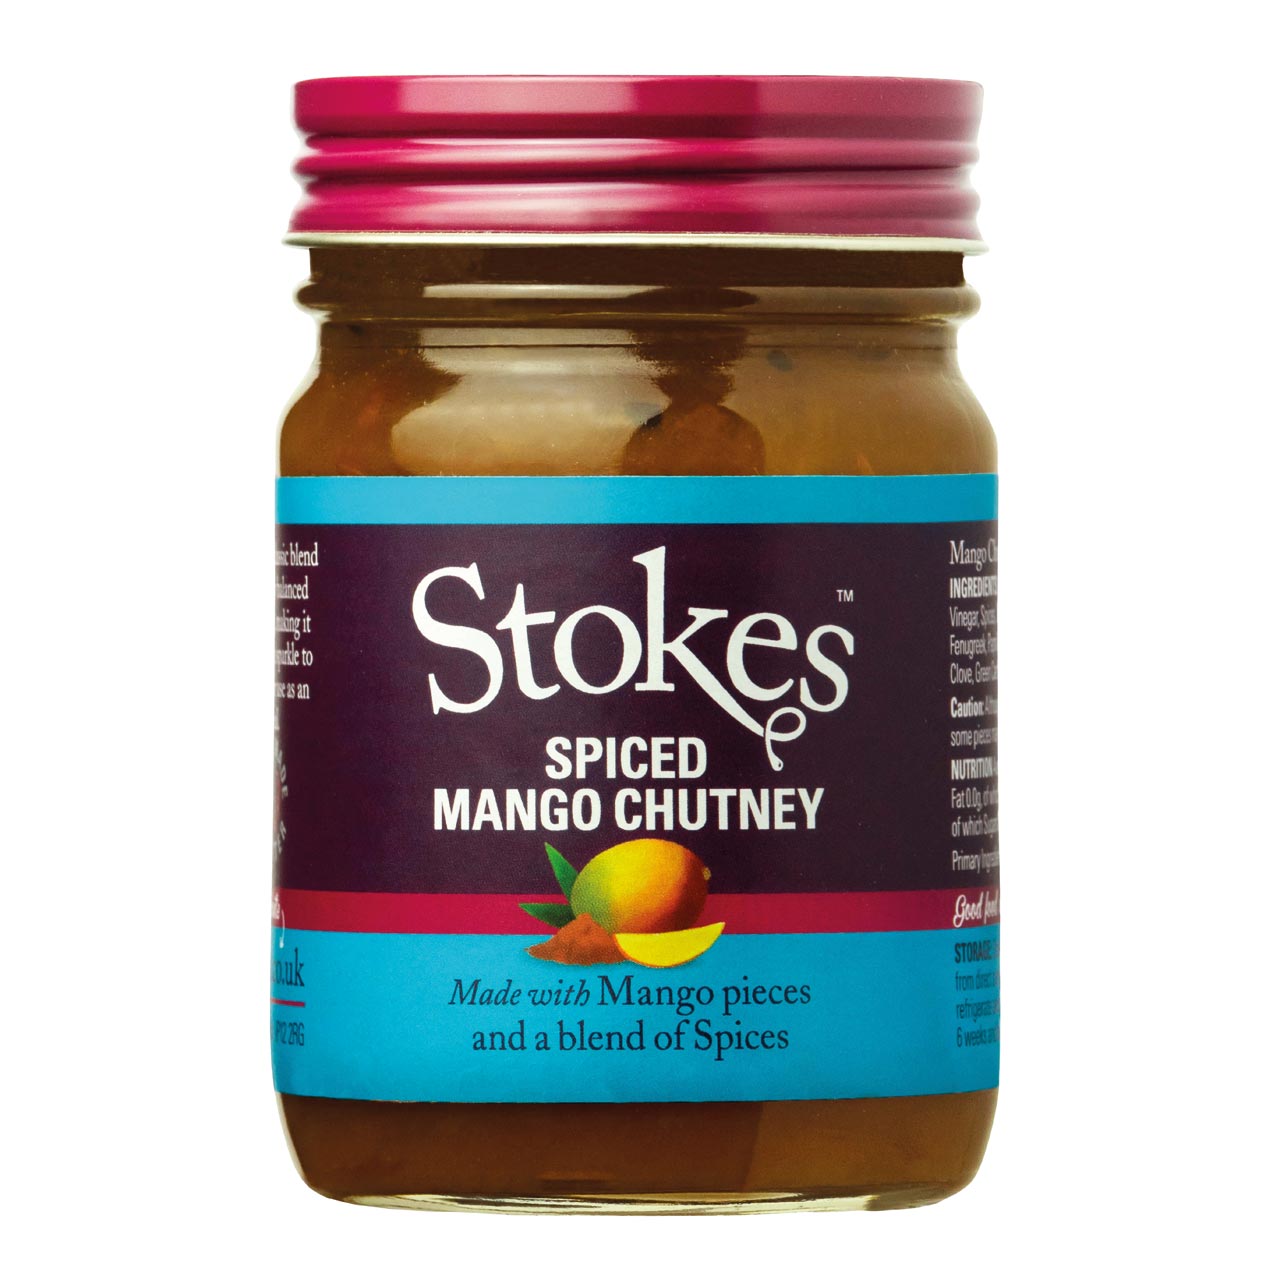 Stokes Spiced Mango Chutney - 270g